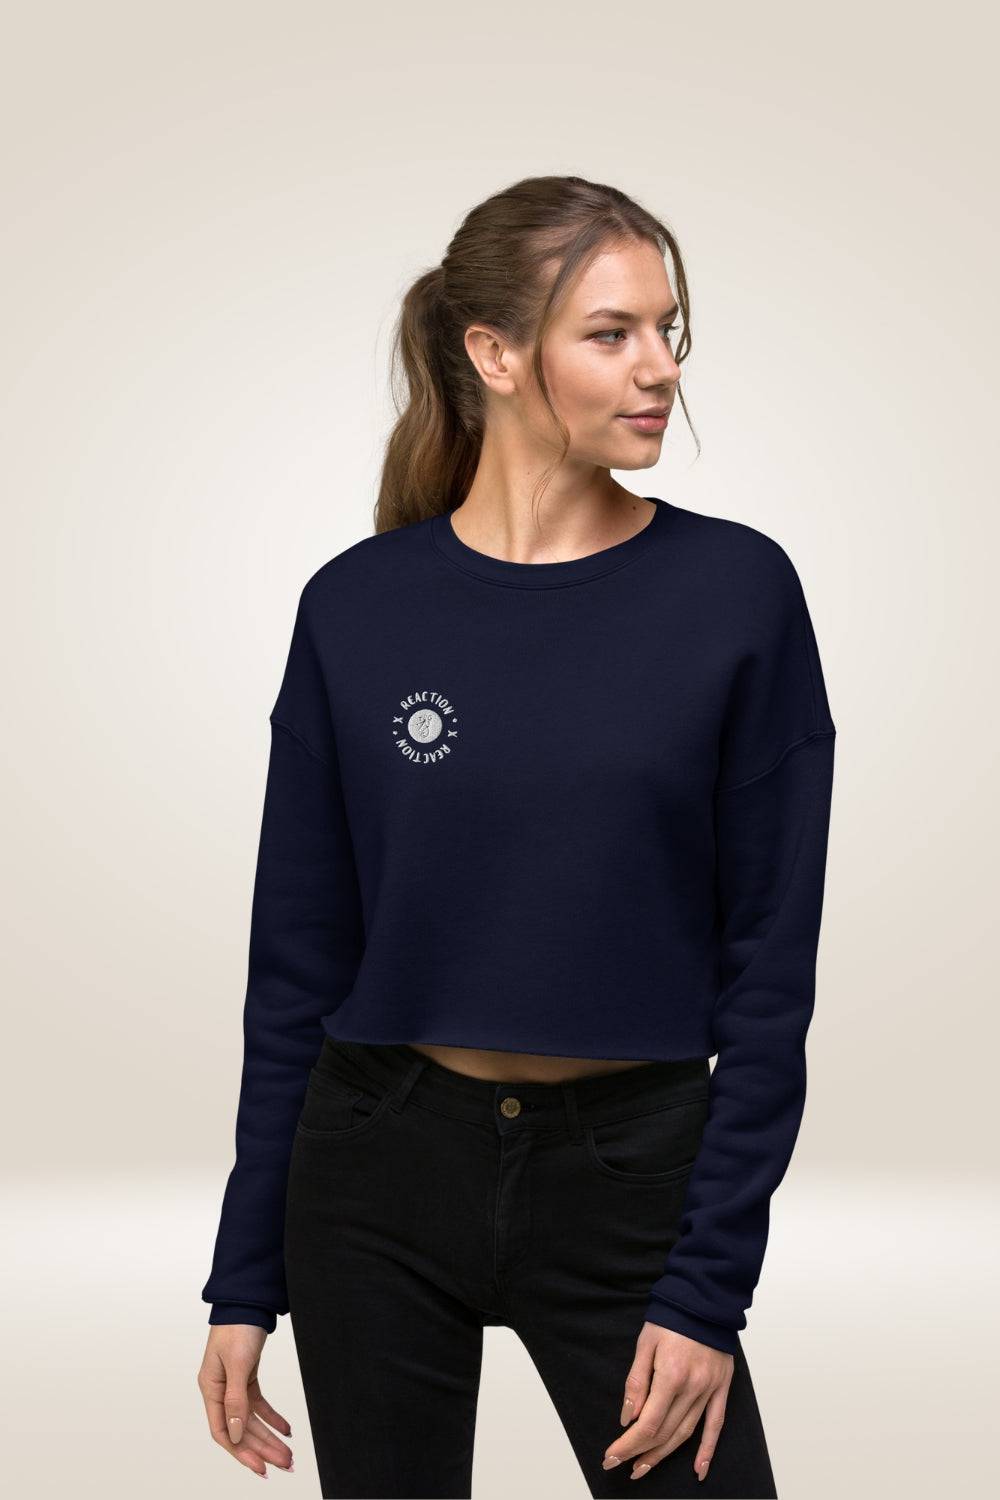 TGC X Reaction Navy Blue Cropped Sweatshirt - TGC Boutique - Cropped Sweatshirt